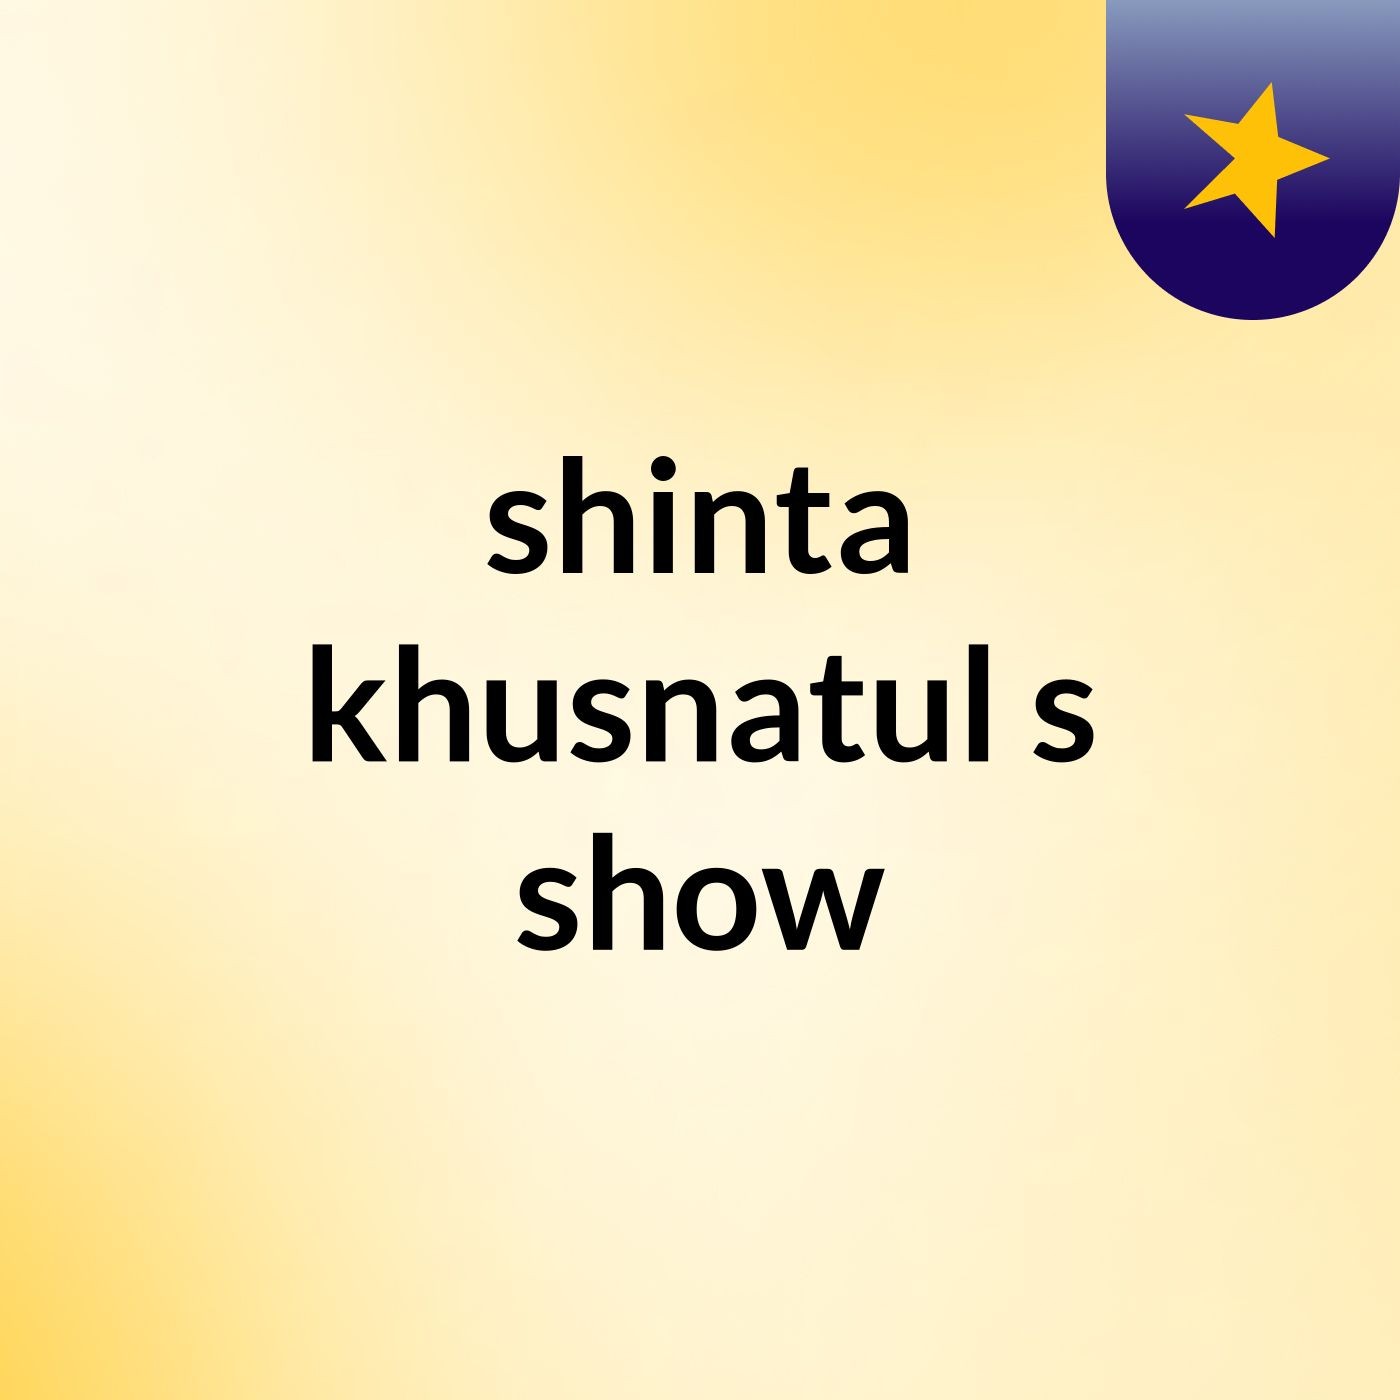 Episode 30 - shinta khusnatul's show